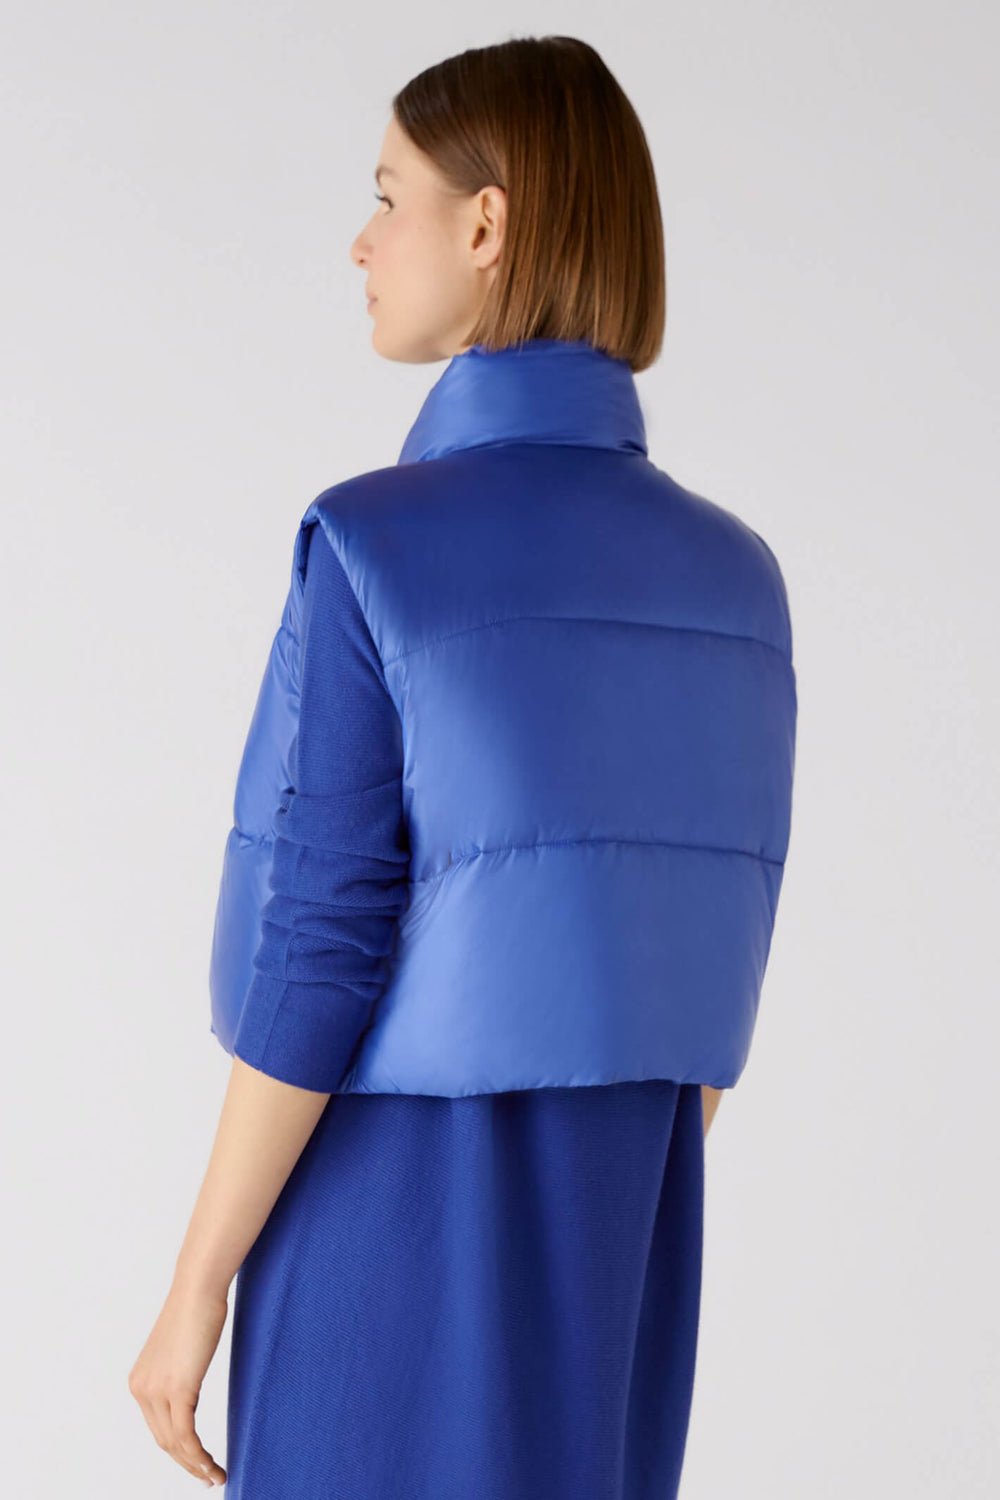 Oui 79619 Blue Padded Gilet - Olivia Grace Fashion